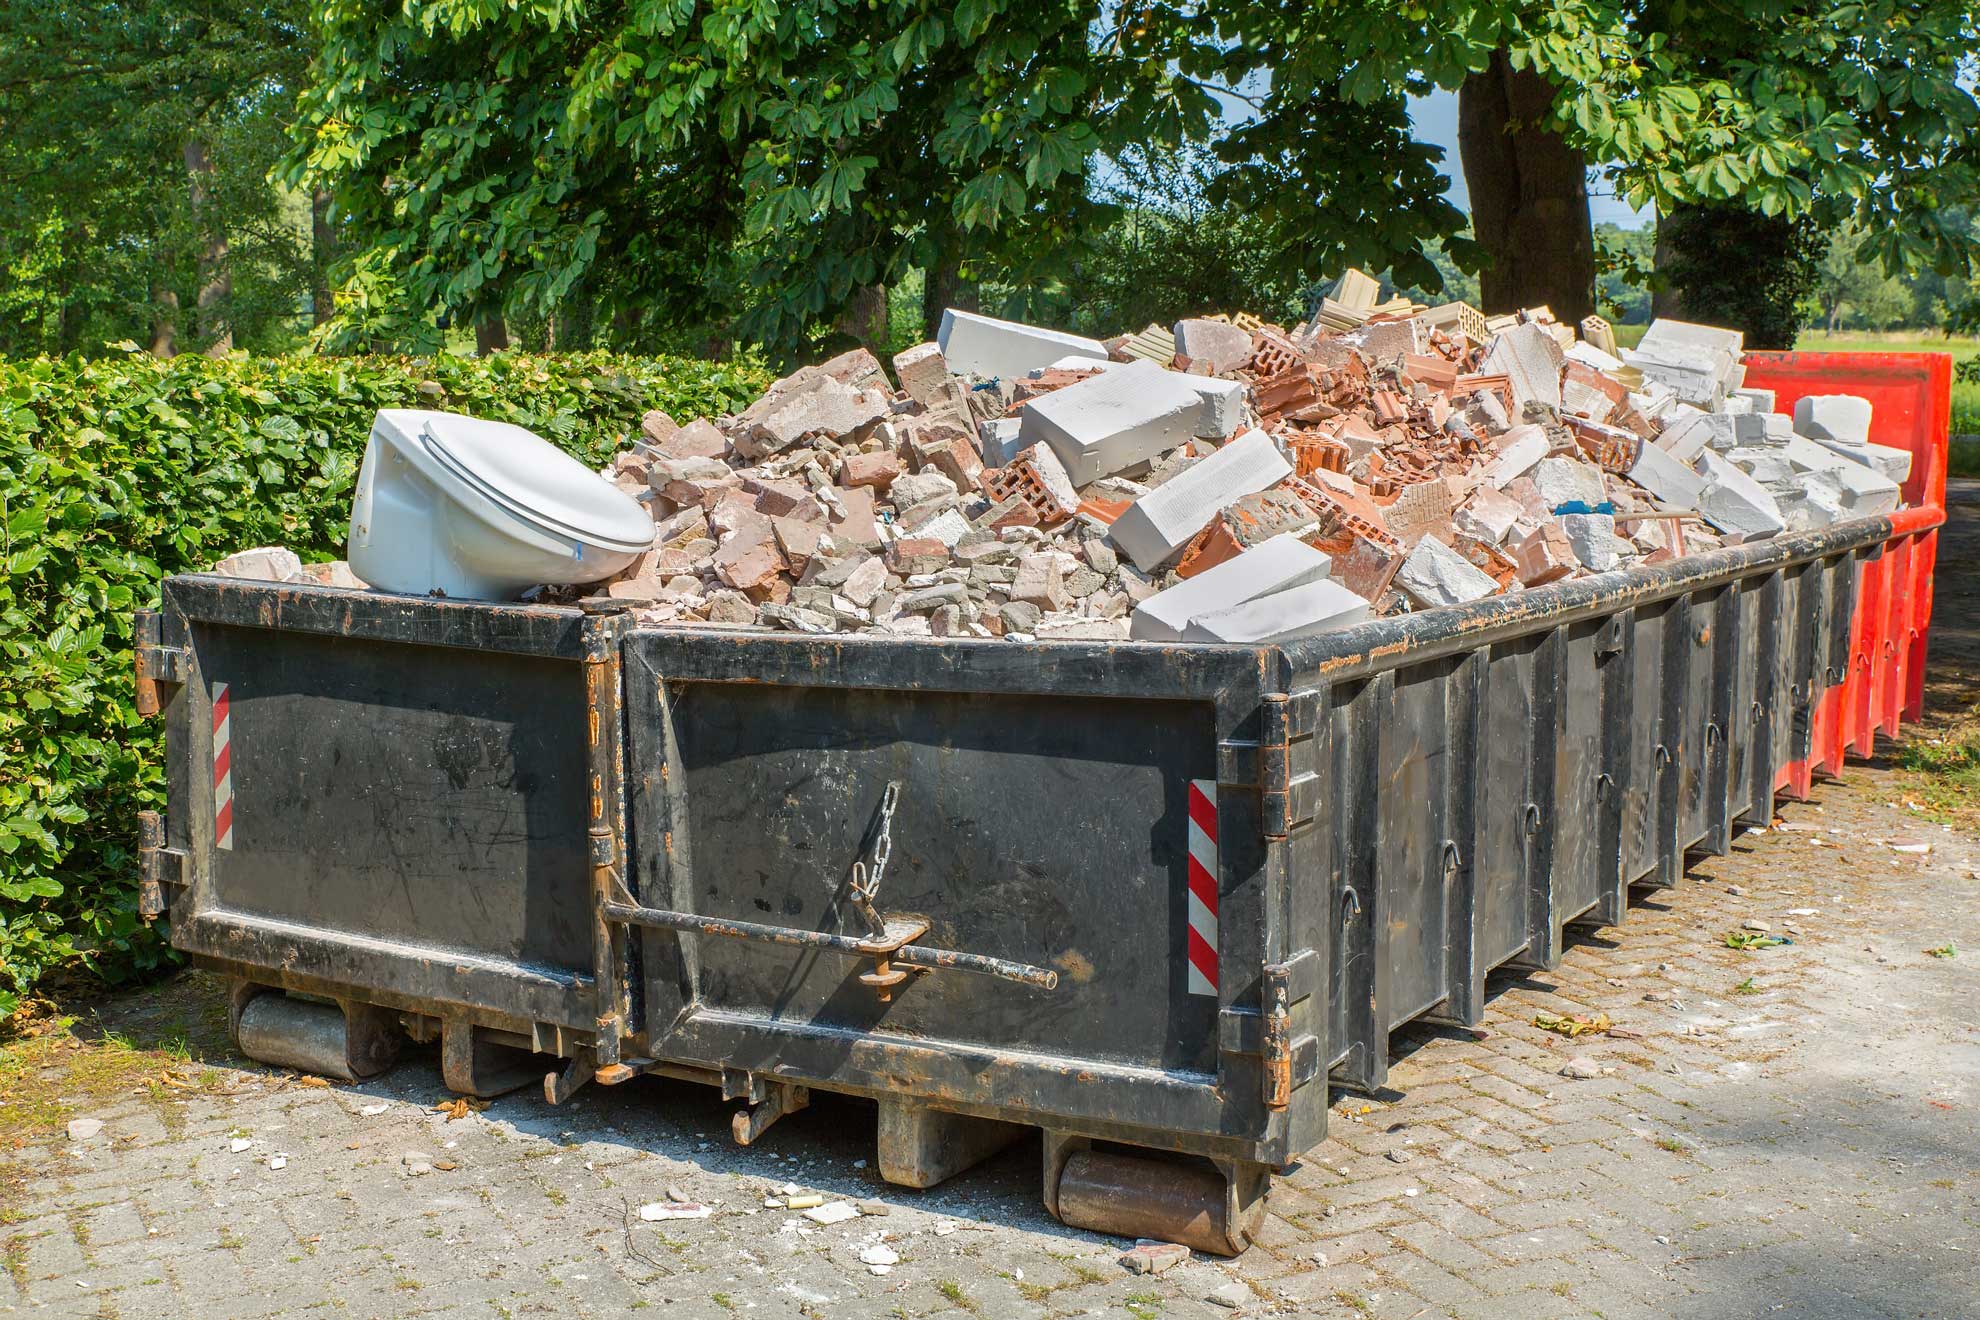 Black dumpster full of bricks, cinderblocks and other construction debris